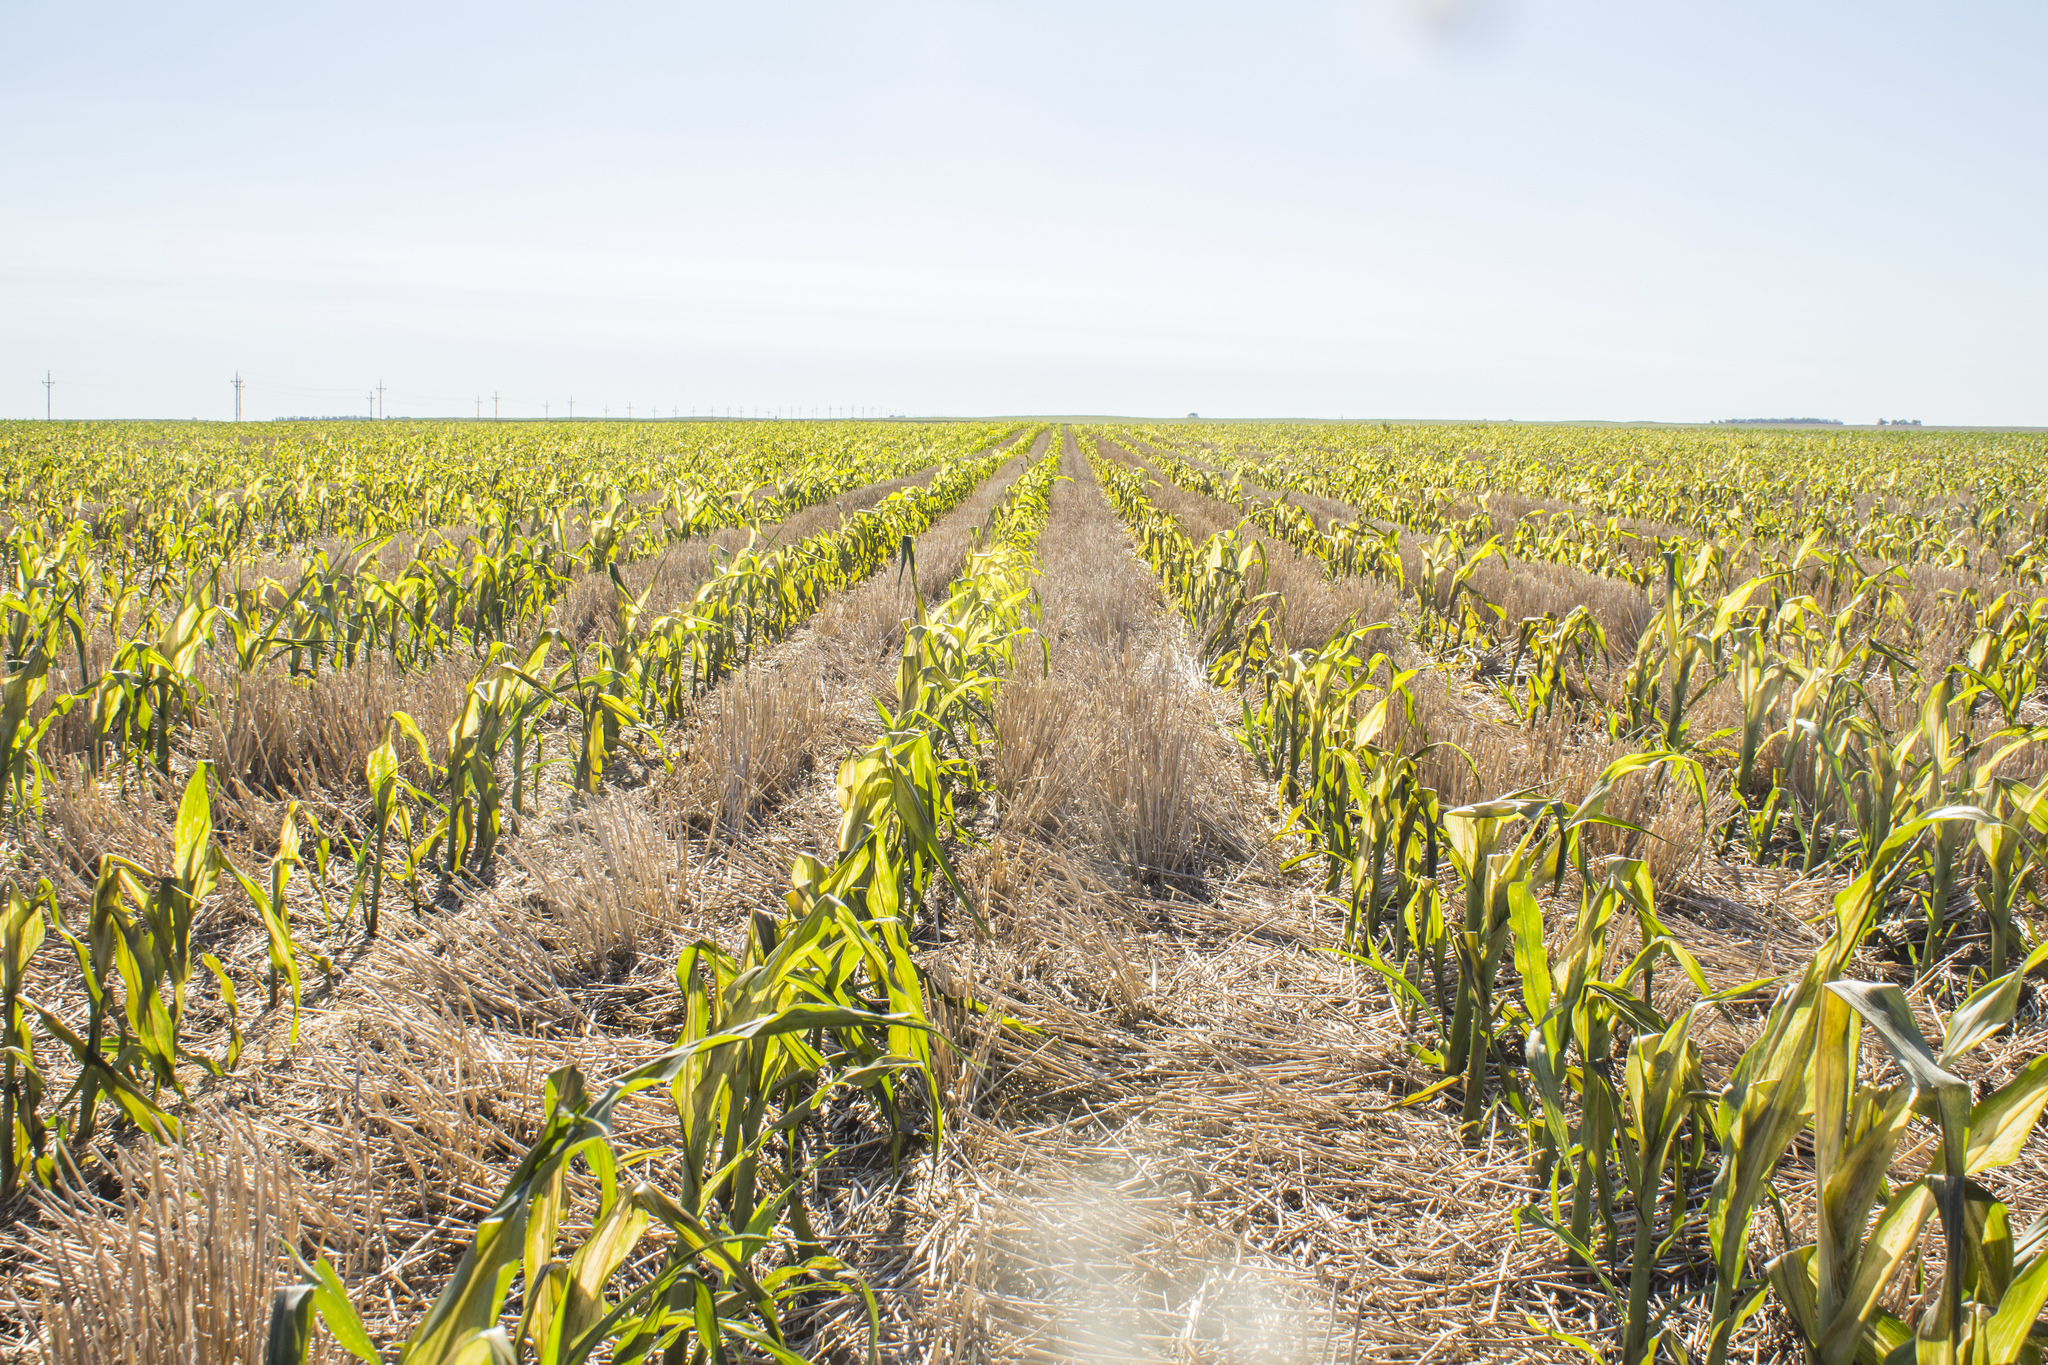 La sécheresse met en péril les récoltes. © USDA, NRCS South Dakota, Flickr